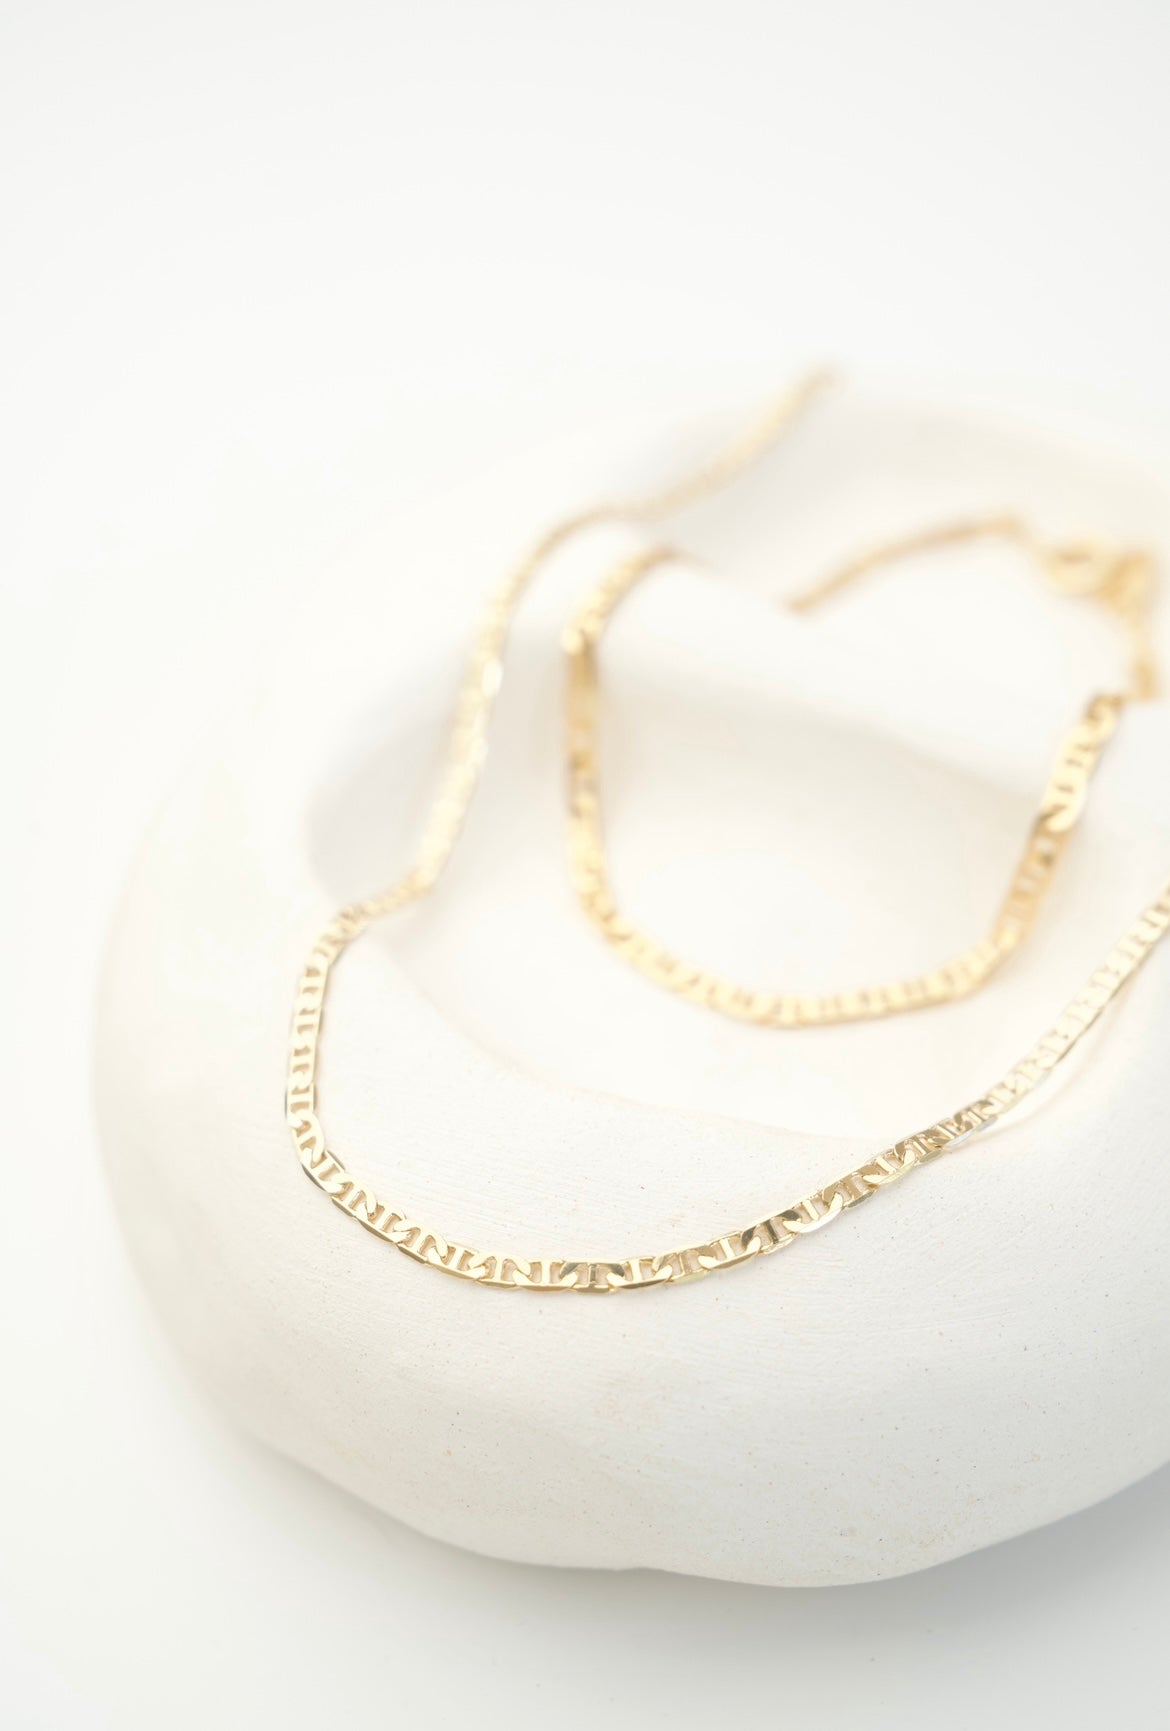 Mariner link delicate Bixby necklace 